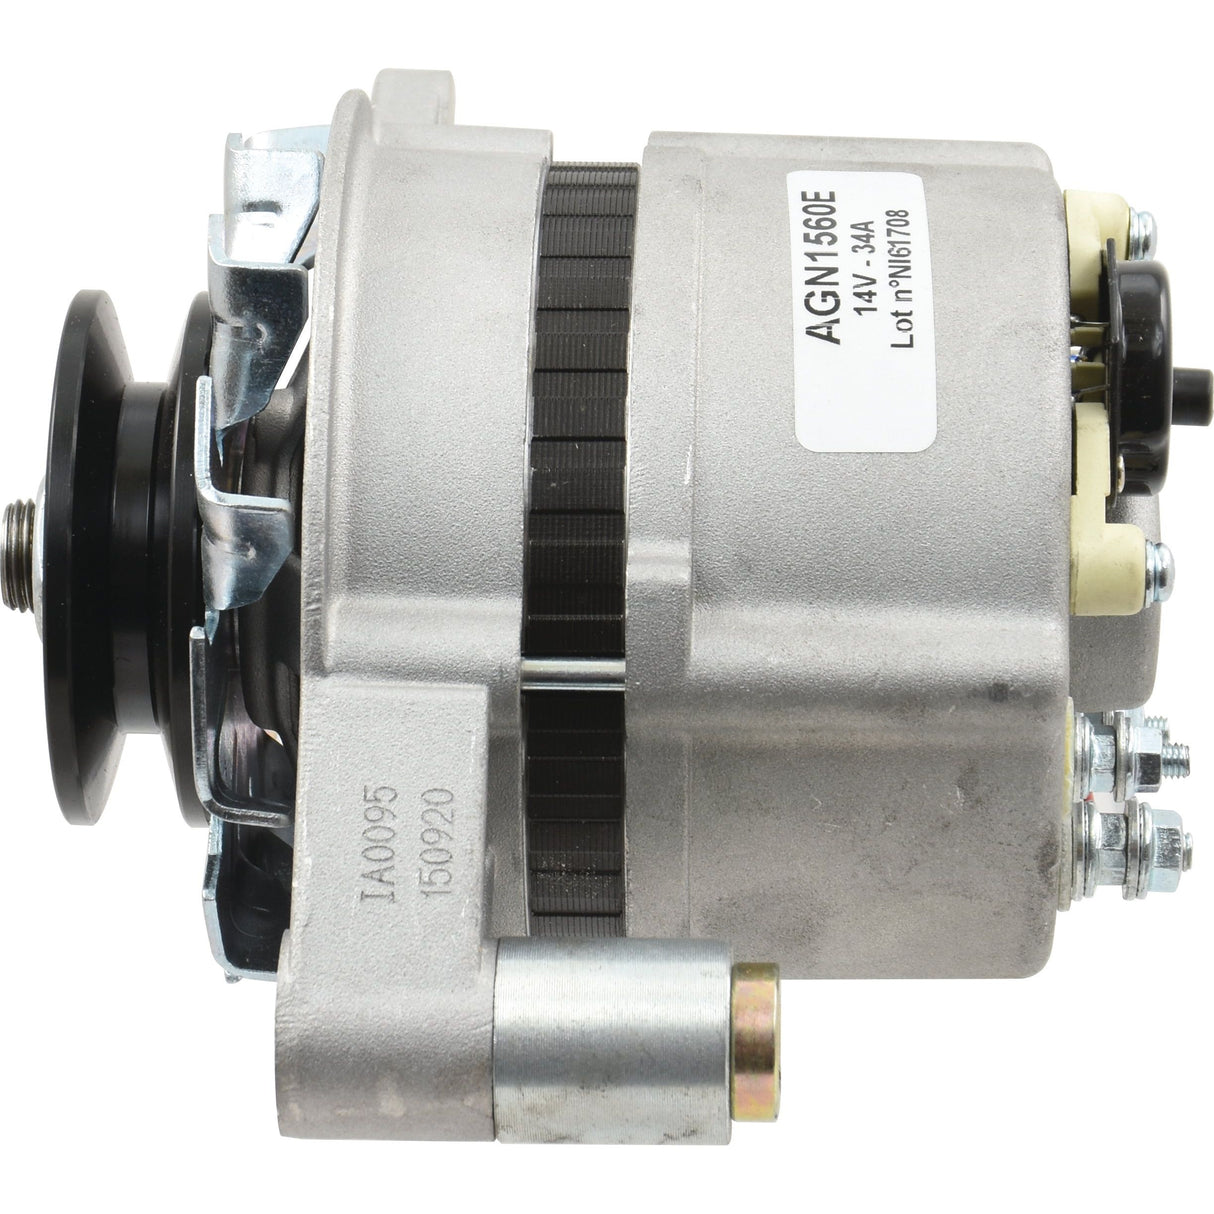 Alternator (Sparex) - 12V, 34 Amps
 - S.67283 - Massey Tractor Parts